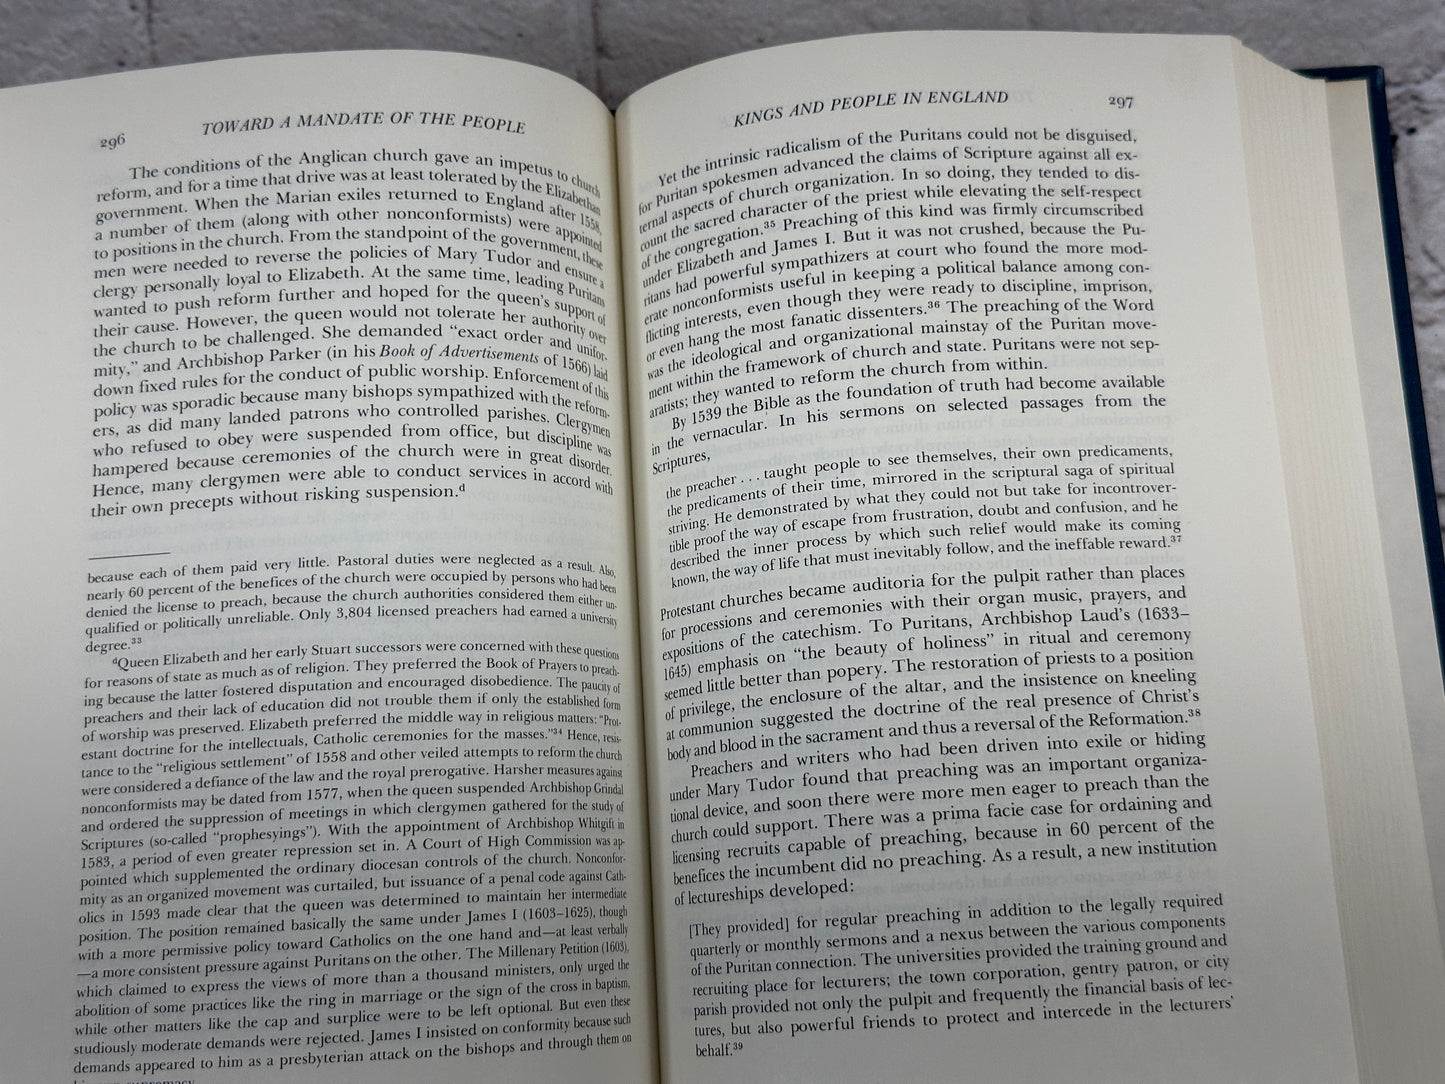 Kings or People: Power and the Mandate to Rule by Reinhard Bendix[1980 · 2nd Printing]